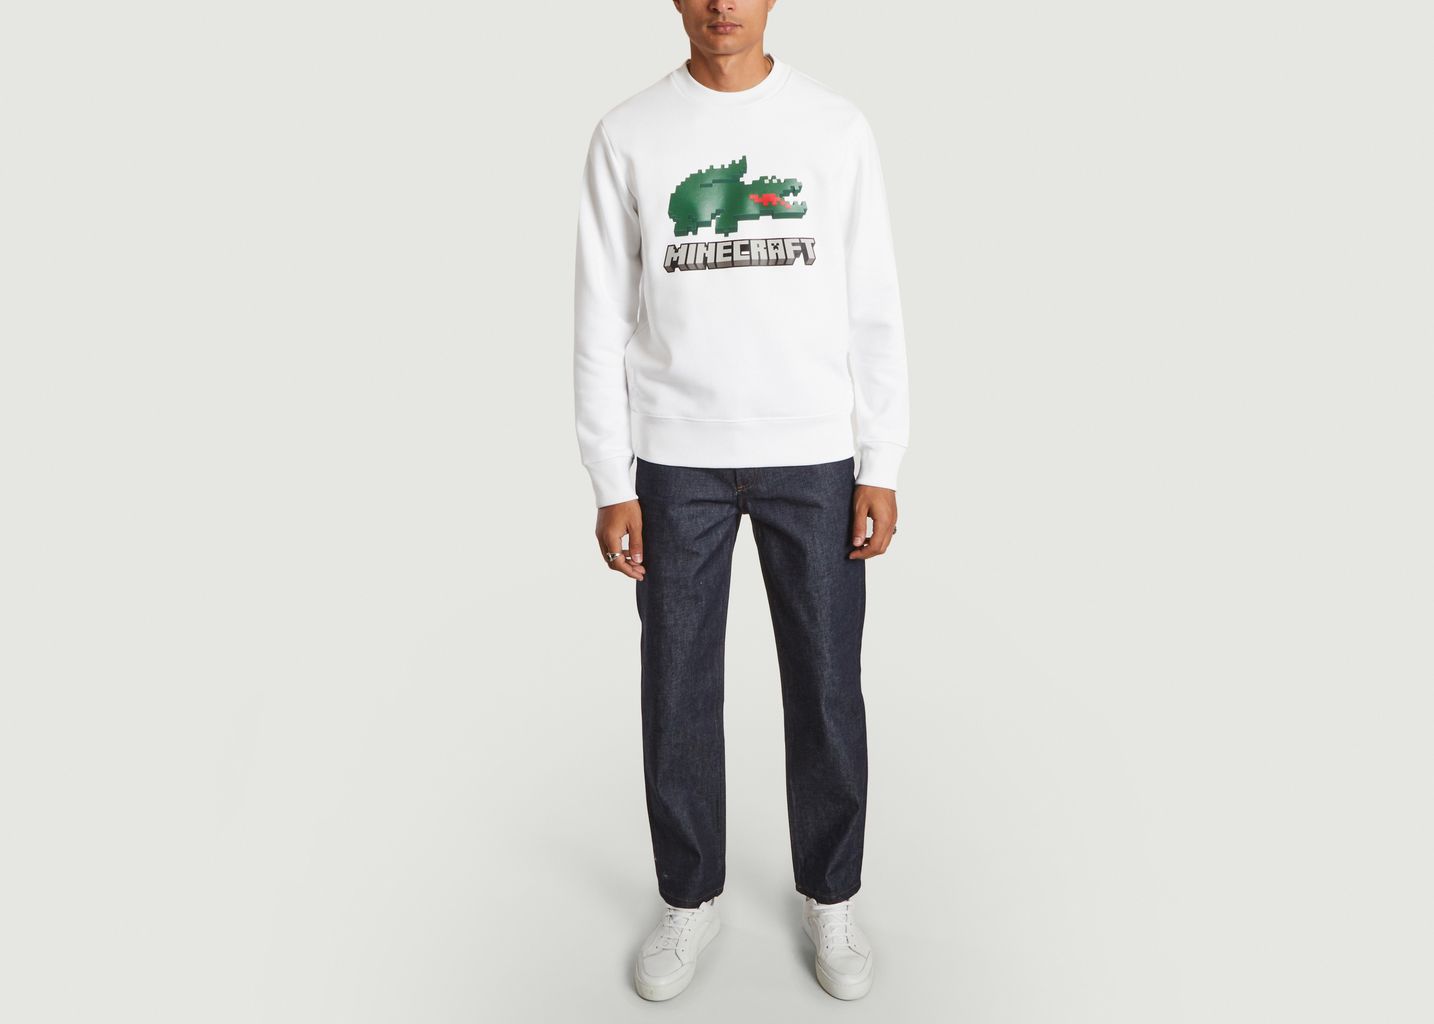 Lacoste x Minecraft organic cotton sweatshirt - Lacoste